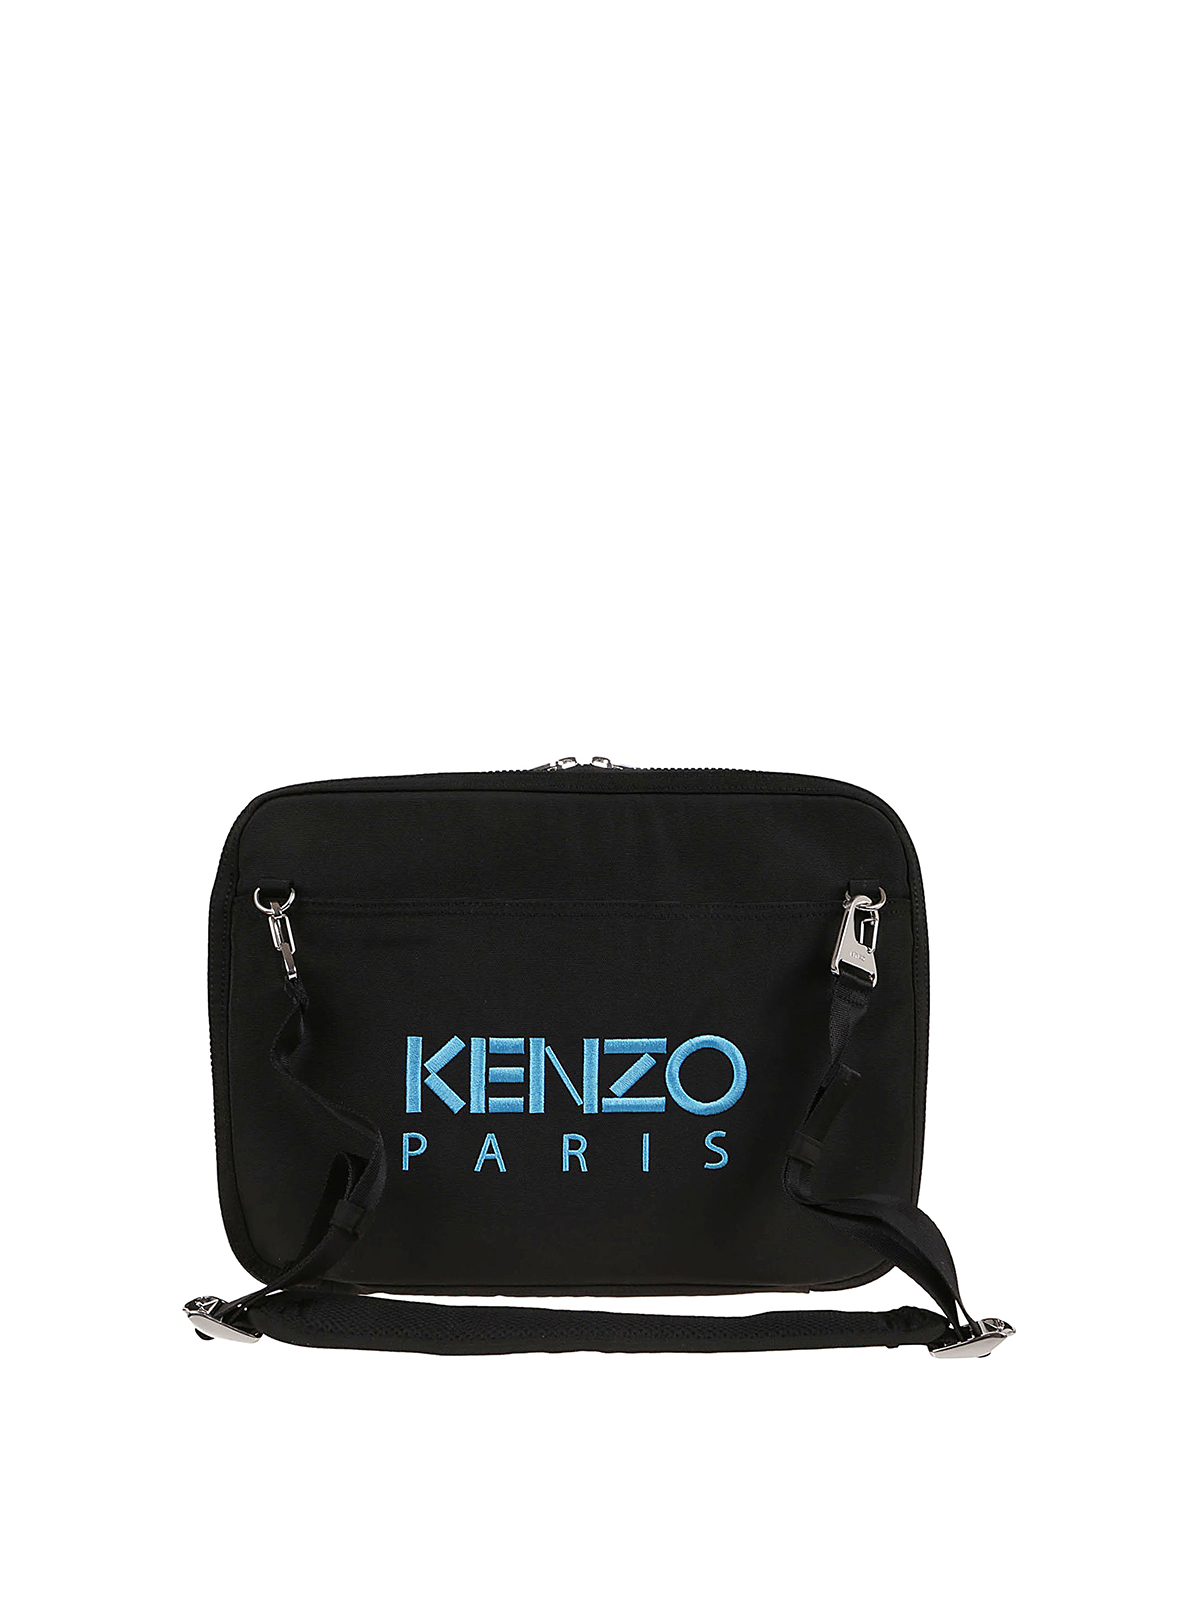 kenzo briefcase